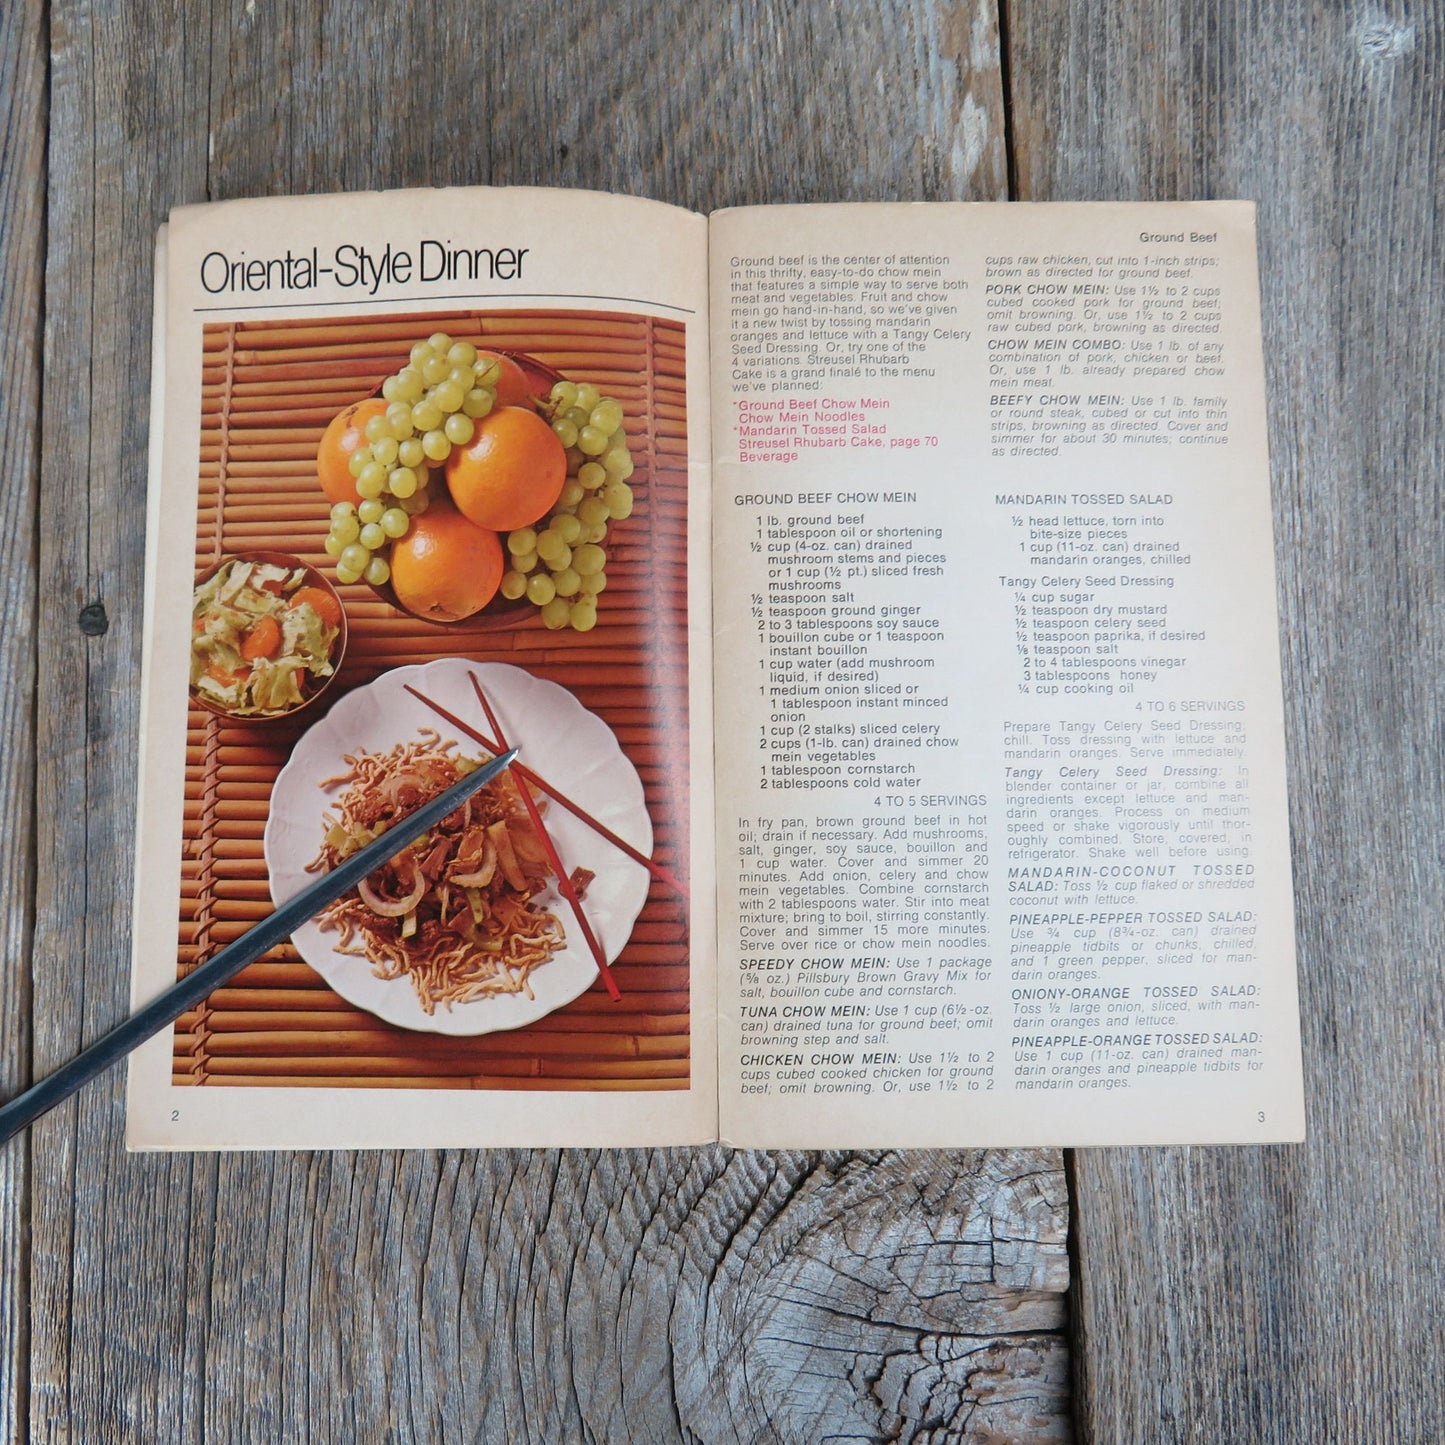 Pillsbury's Money Saving Meals Cookbook 1970 Recipes Menus Low Cost Food Paperback Booklet Grocery Store Vintage